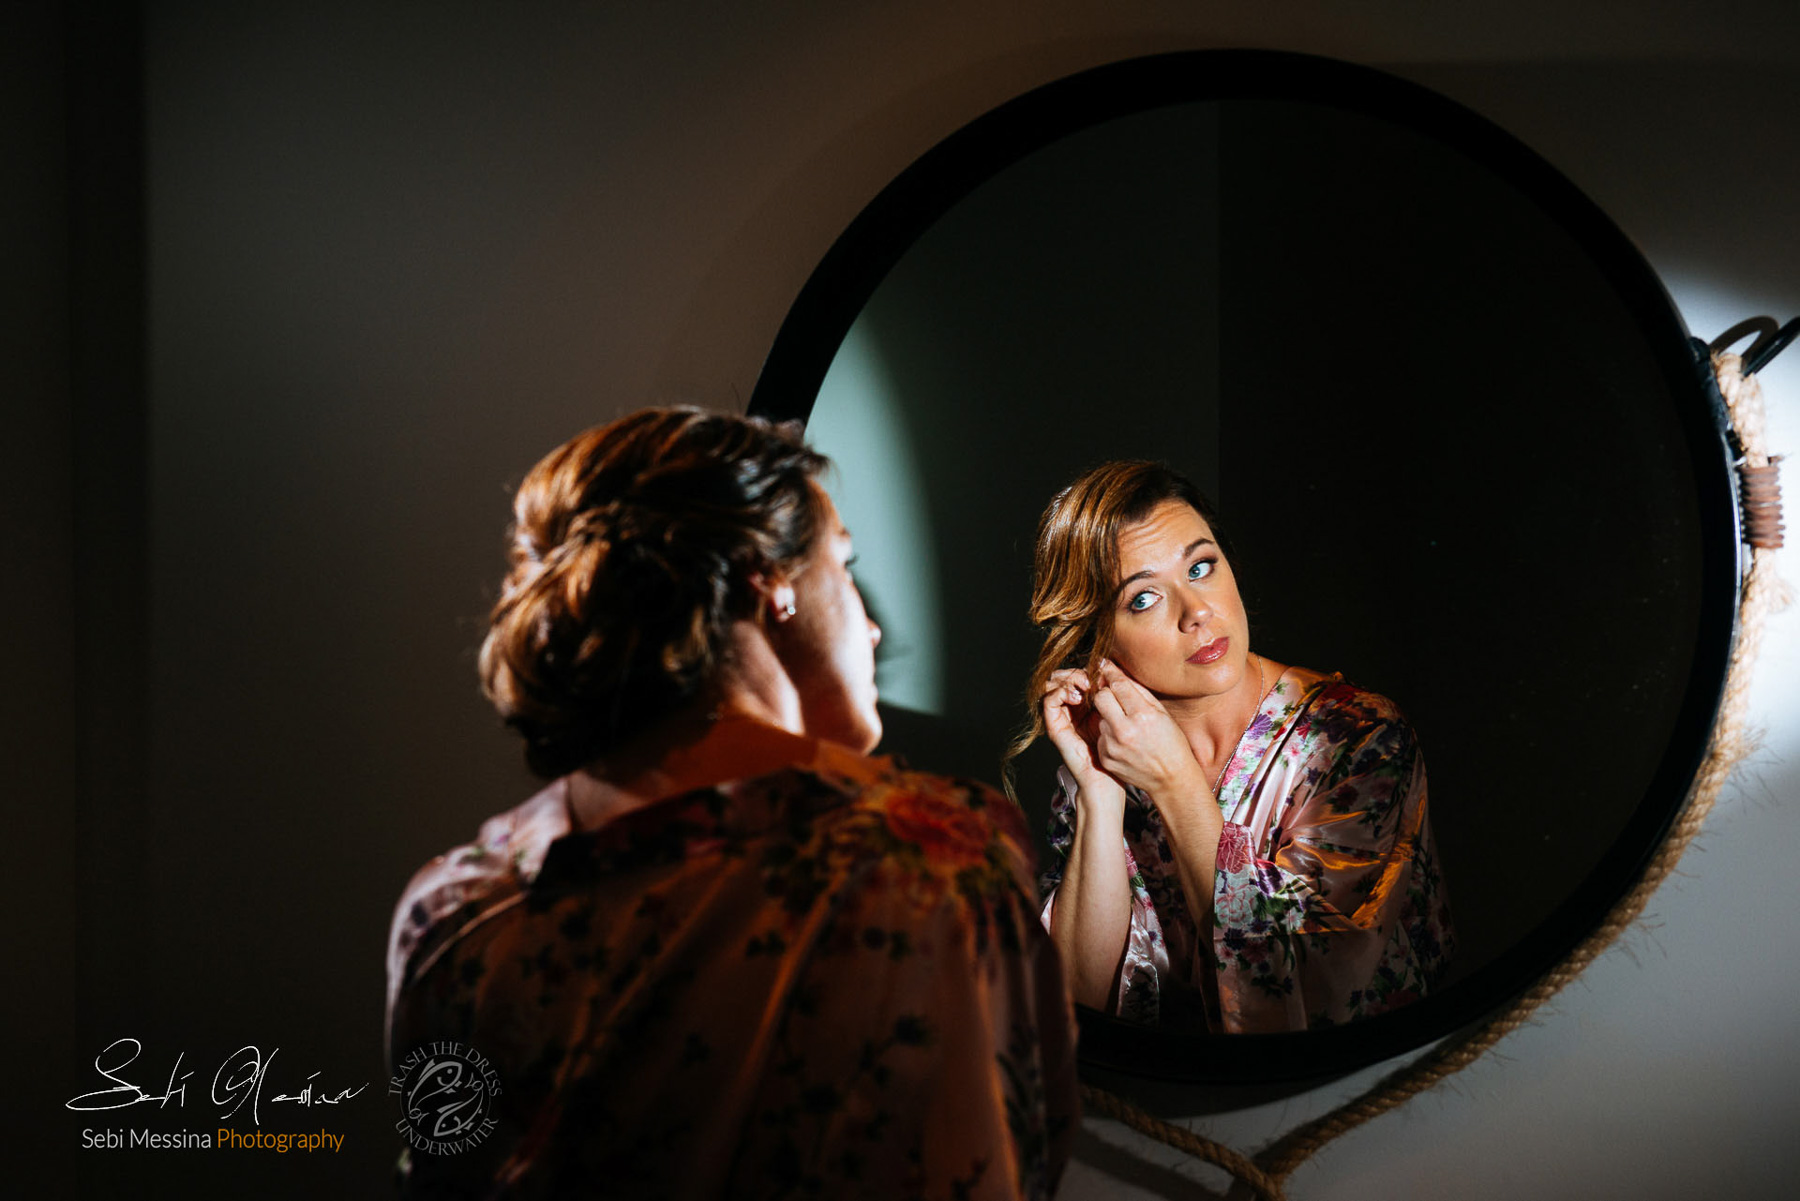 Bride getting ready – Wedding Unico 20 87 – Mexico – Sebi Messina Photography